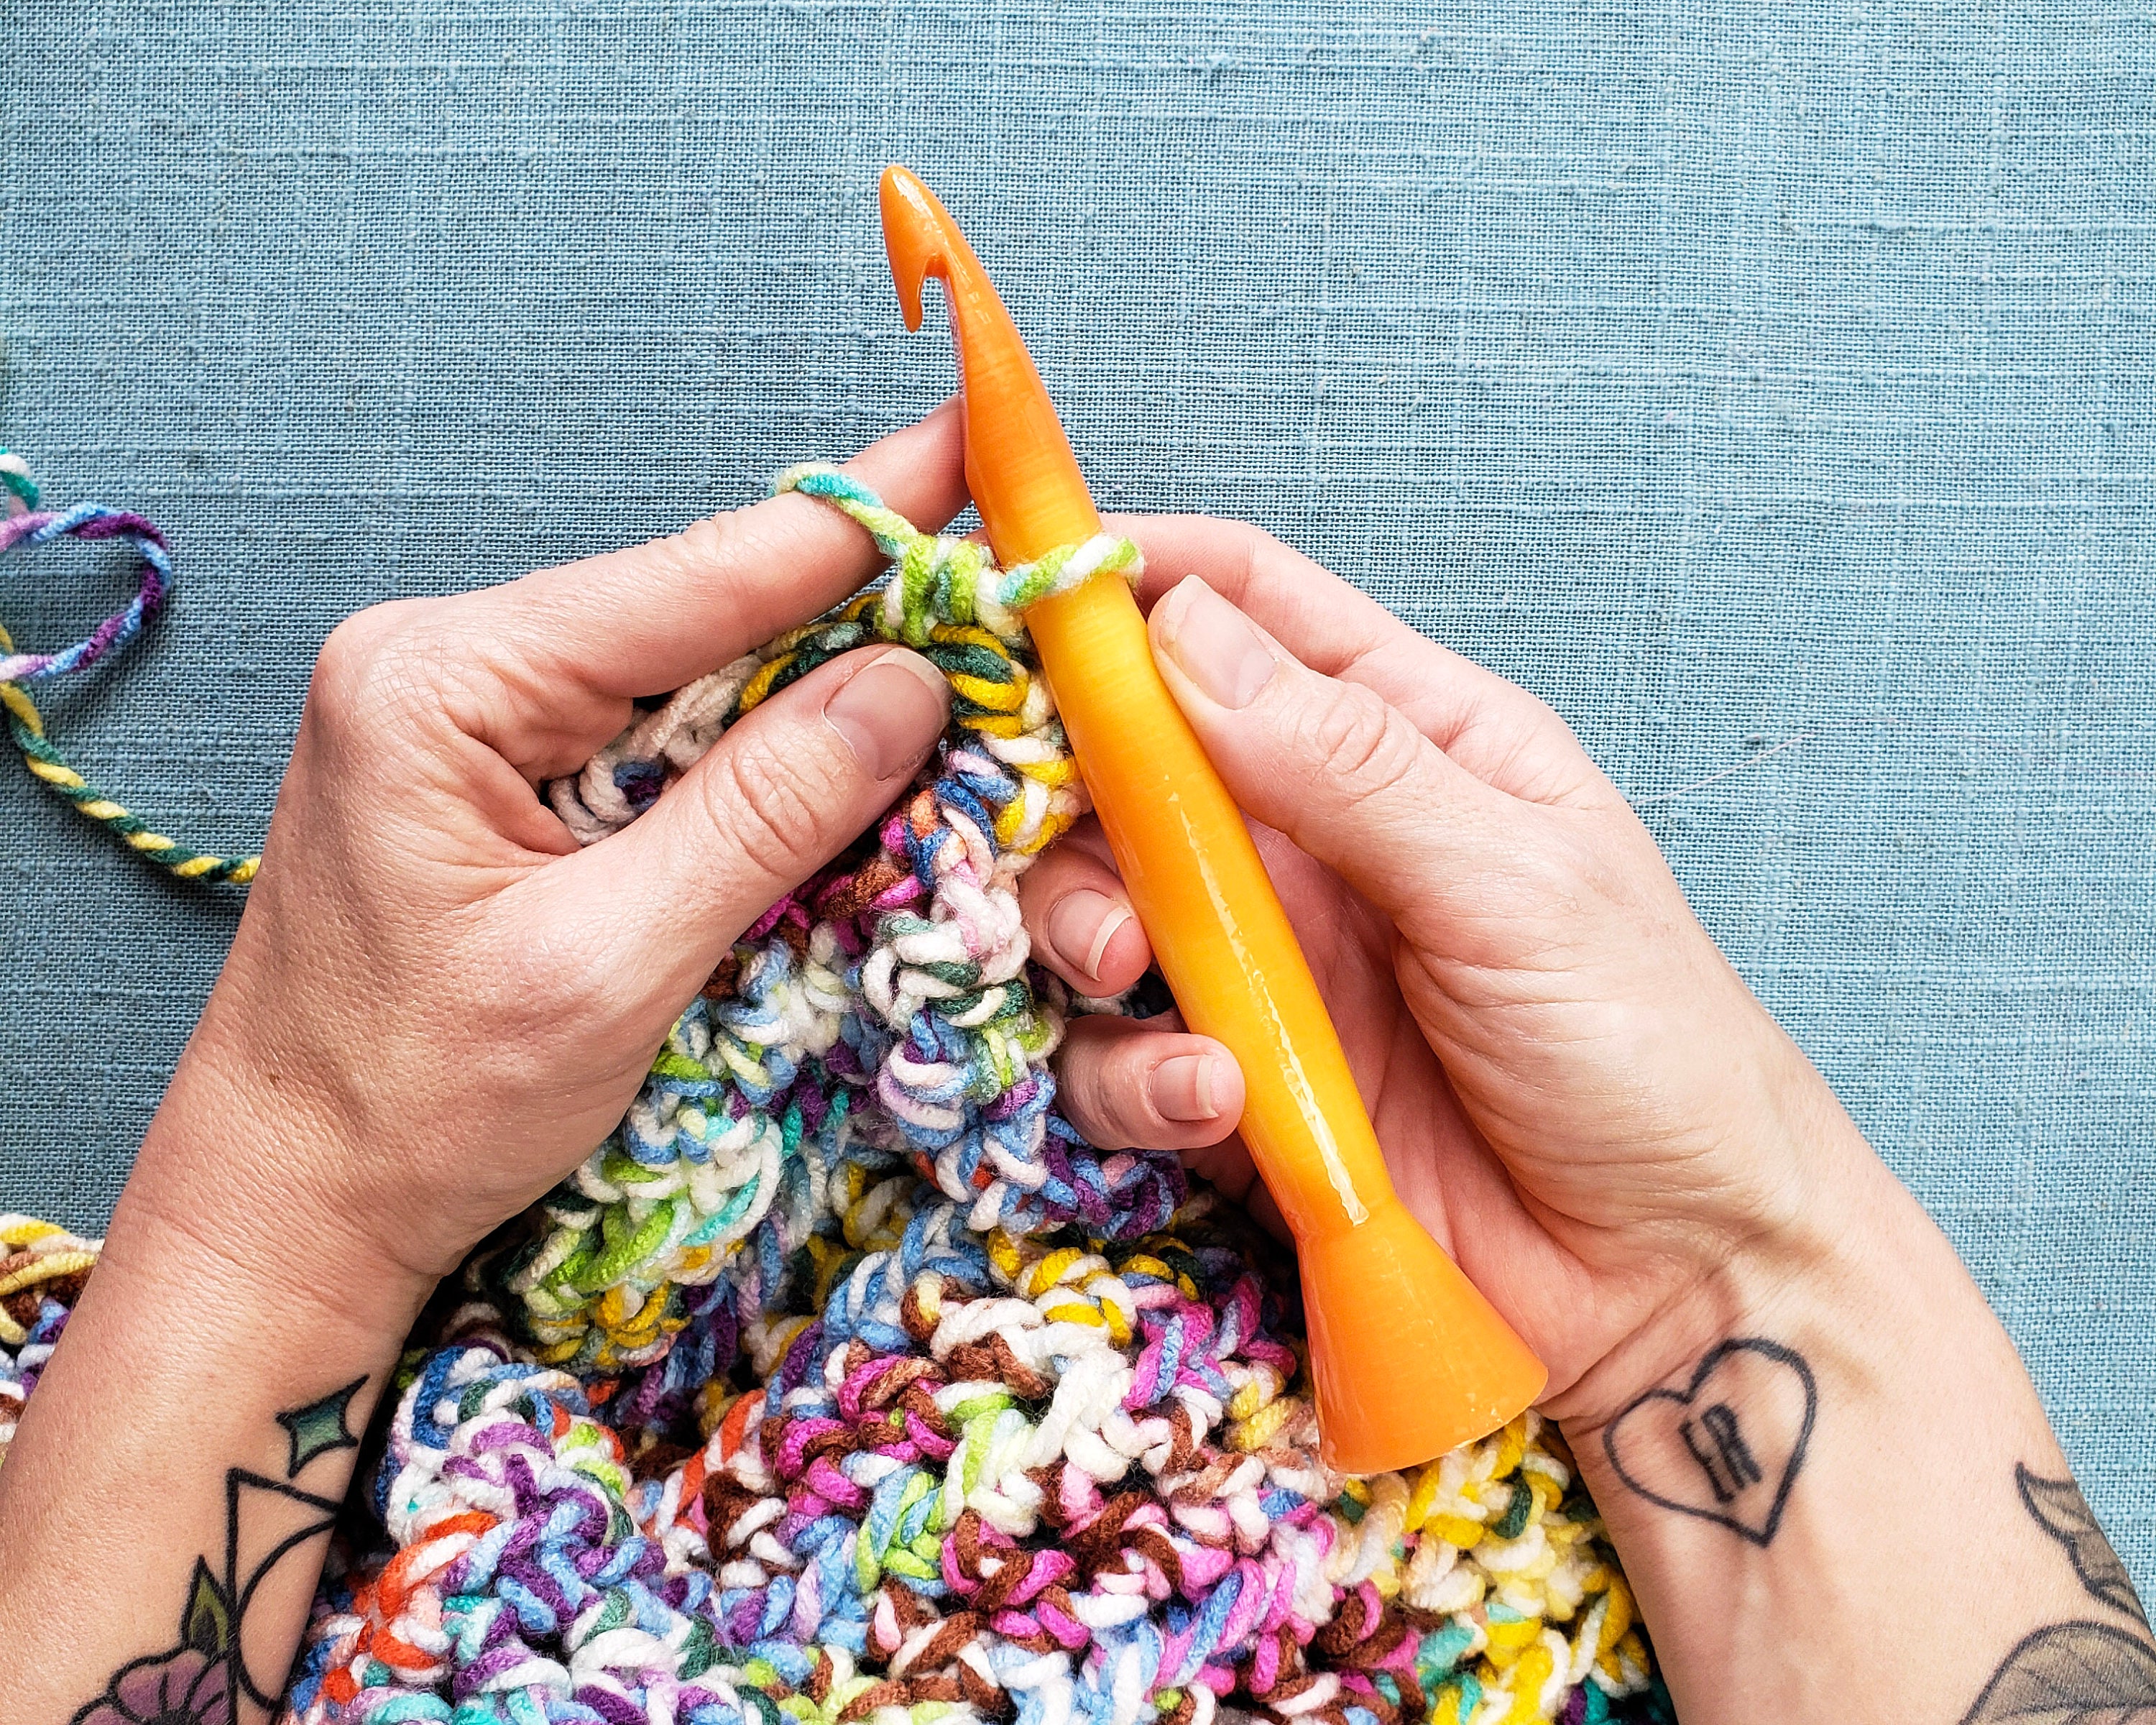 6.5mm Color Change Orange to Yellow, Ergonomic Crochet Hook, 3D Printed  Hybrid Hook, Susan Bates Inline Style Metal Hook, Gift for Crocheter 